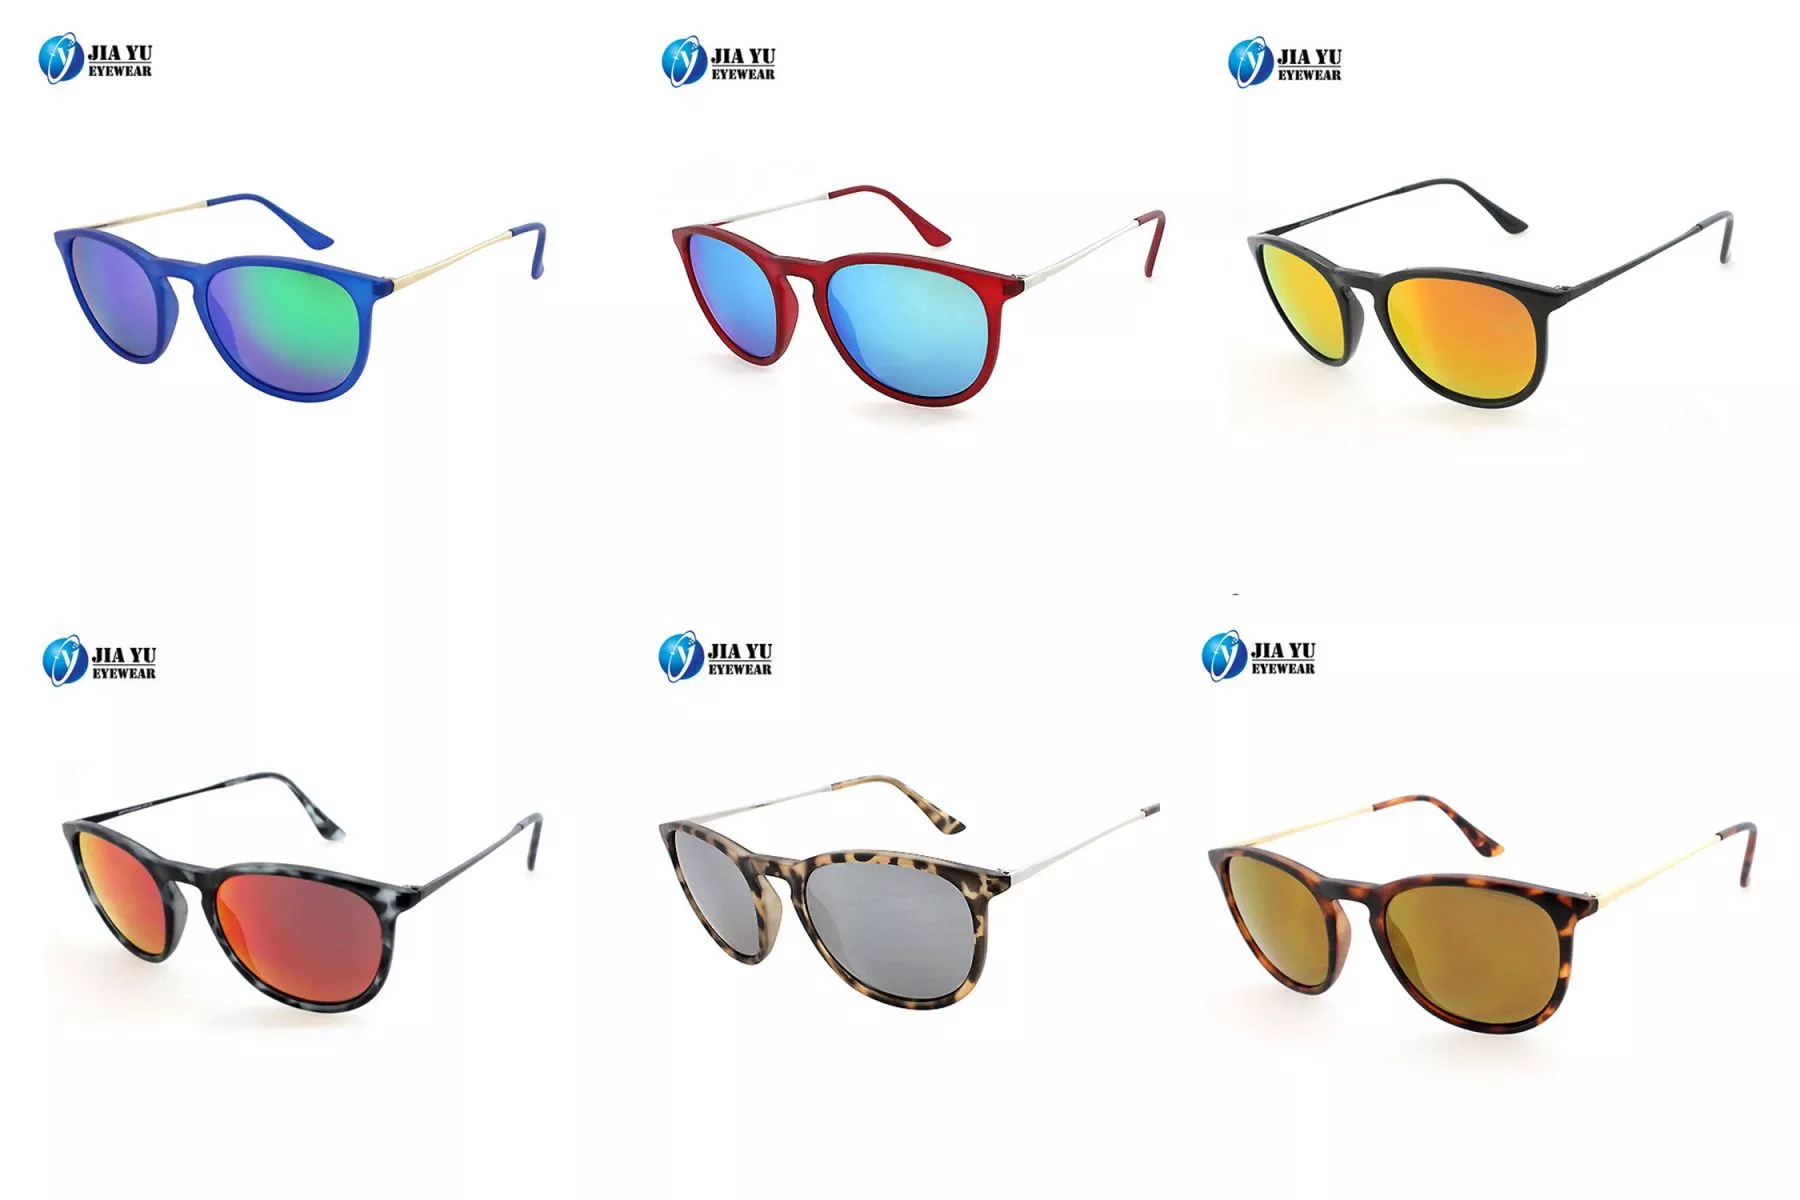 keyhole-bridge-sunglasses-custom-colors-polycarbonate-custom-design.jpg